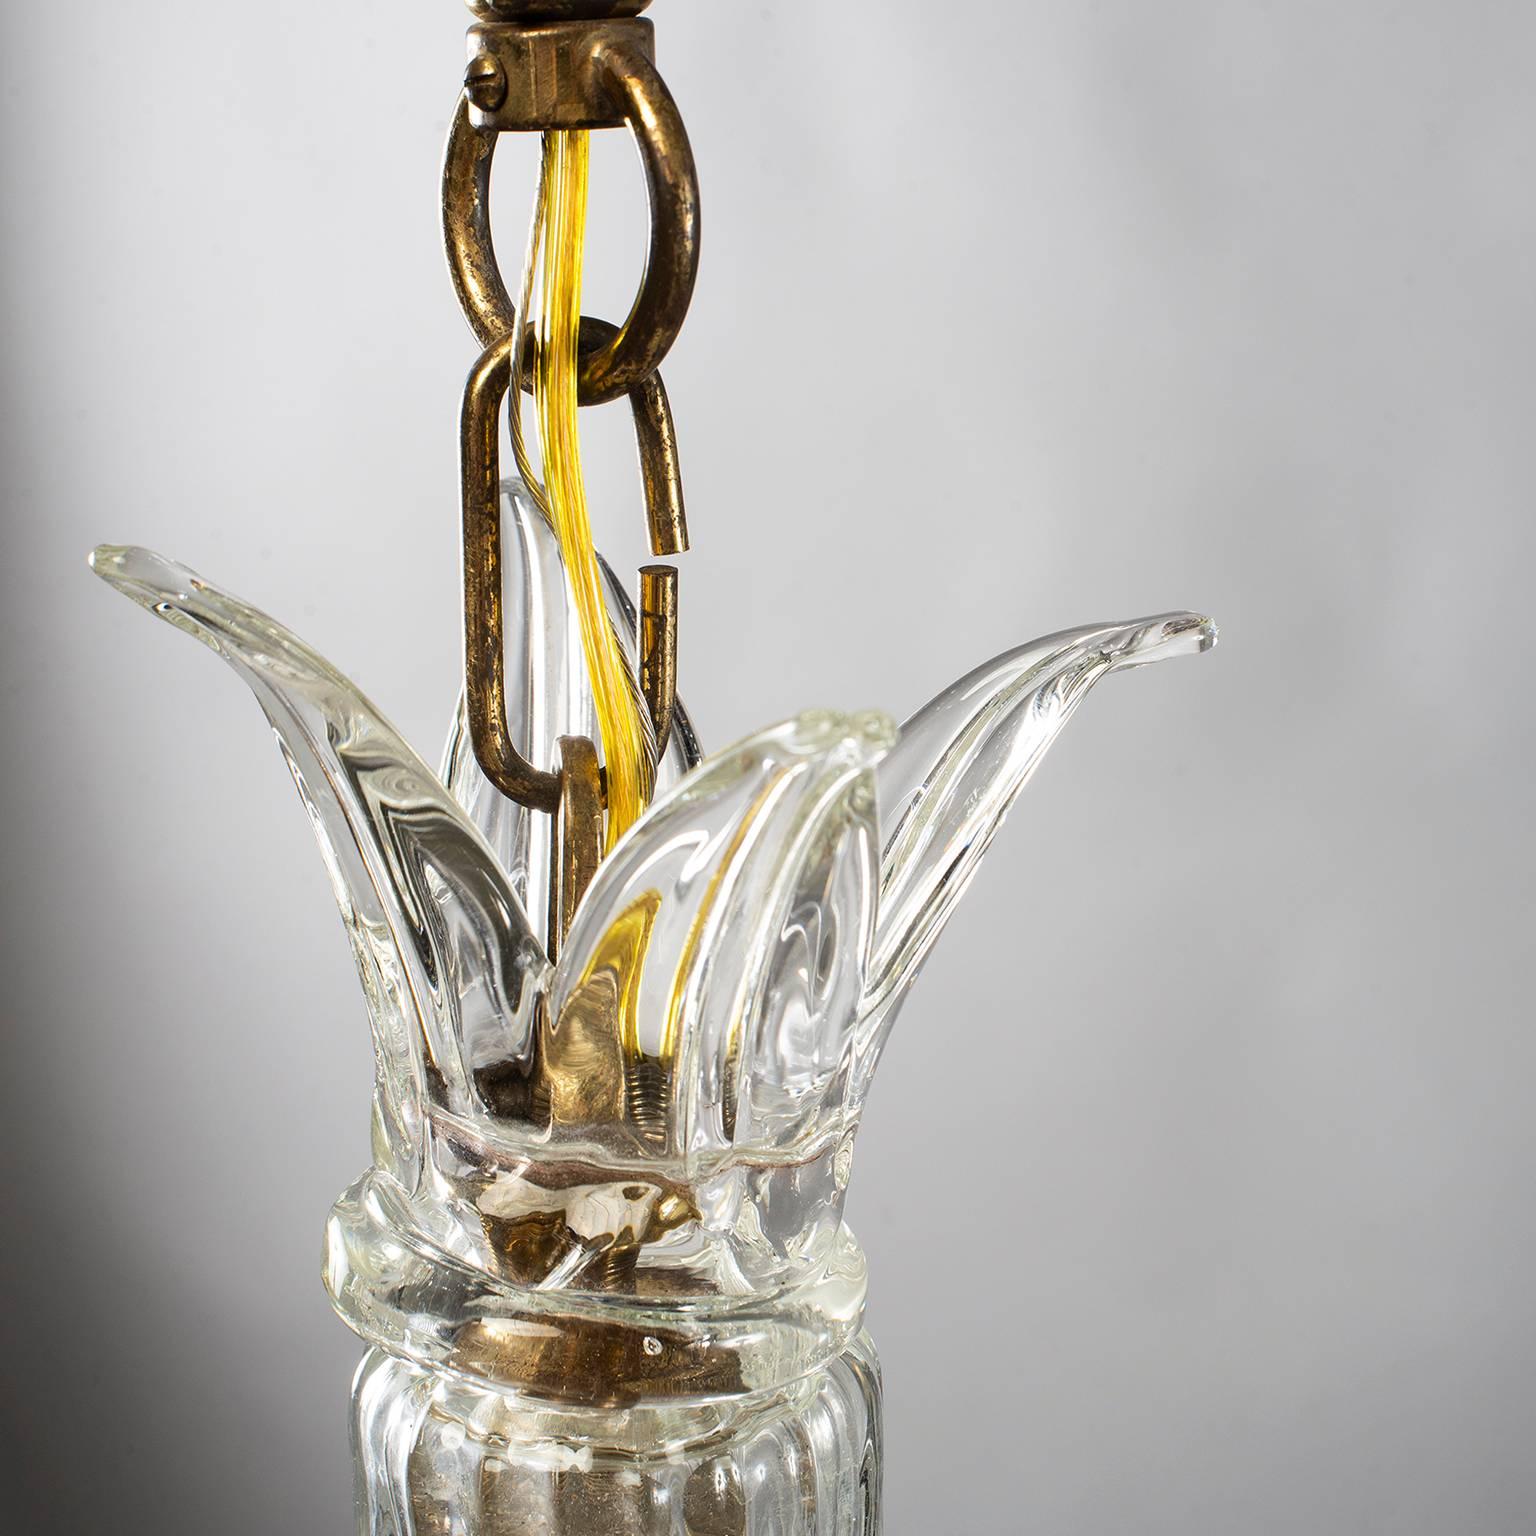 20th Century Large Art Deco Era Murano Glass Lantern Attributed to Barovier and Toso